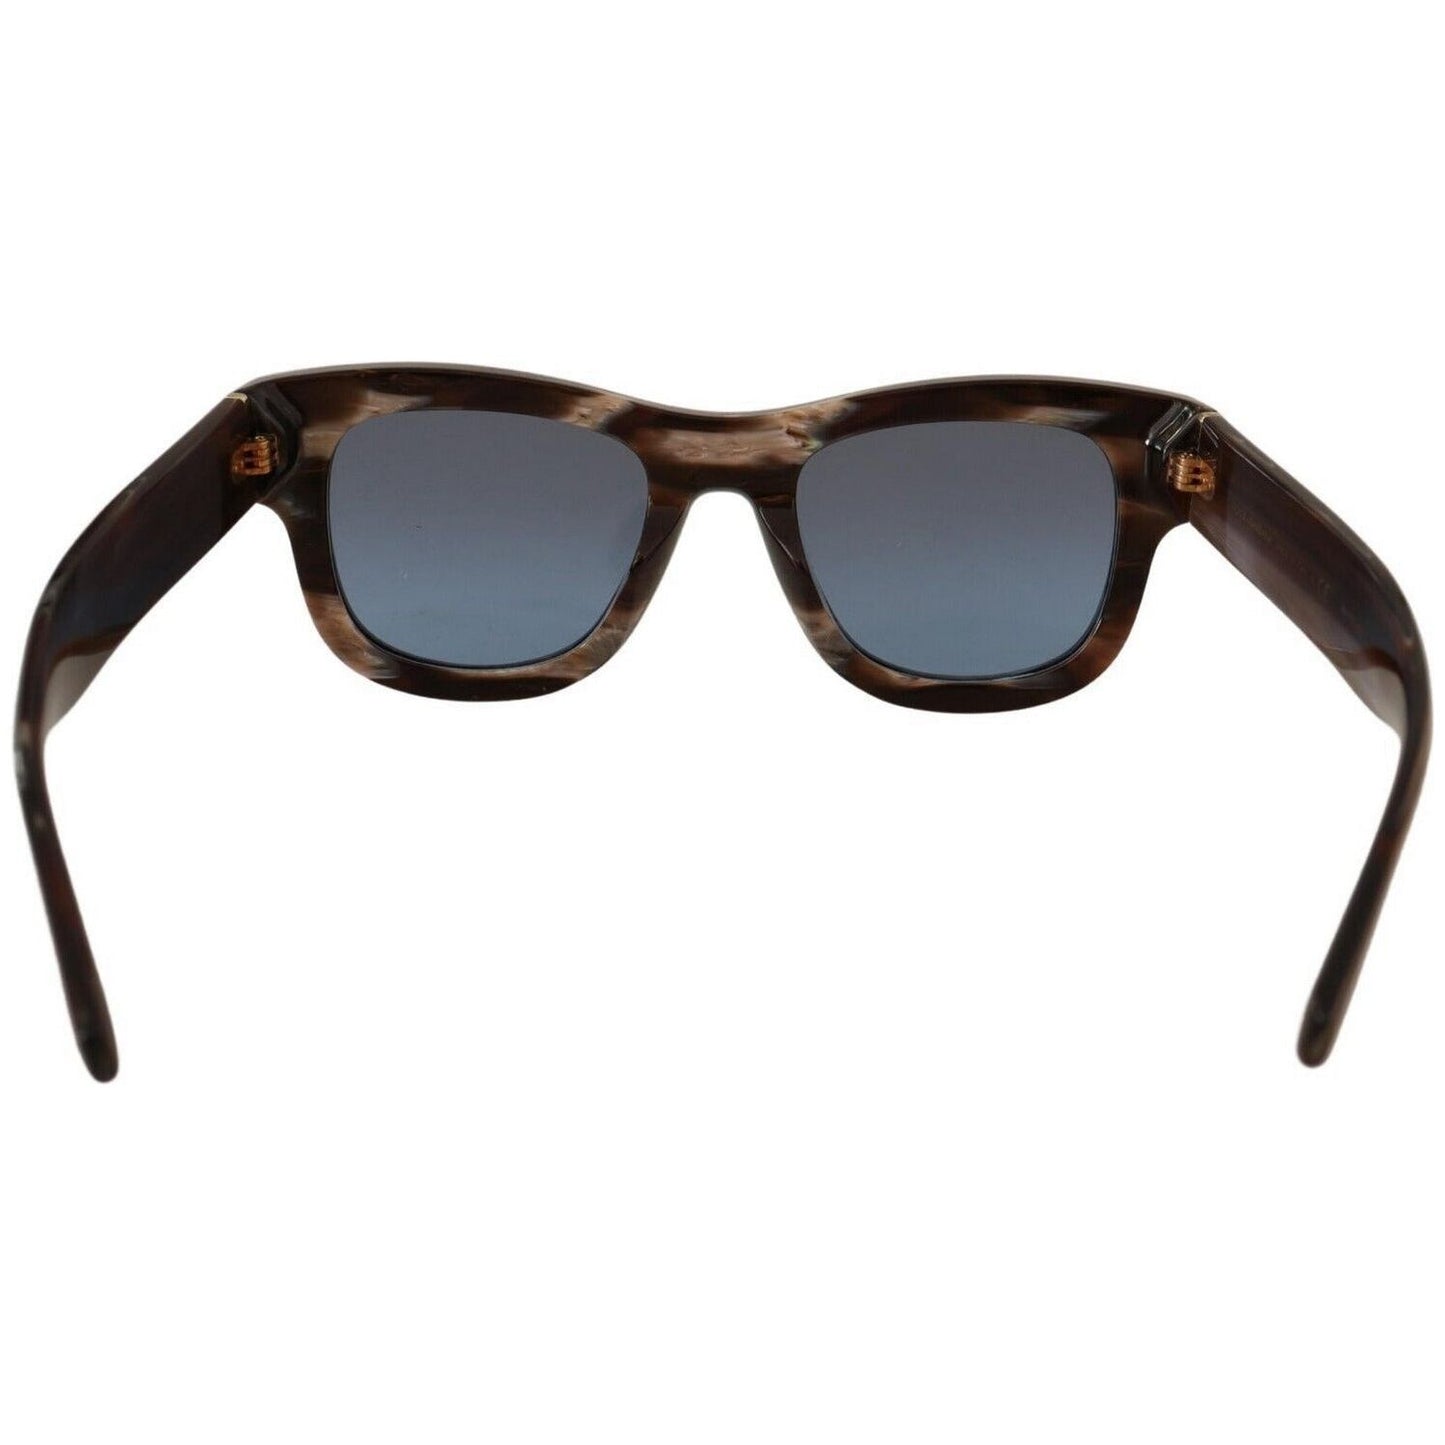 Dolce & Gabbana Elegant Brown & Blue Gradient Sunglasses brown-blue-gradient-lenses-eyewear-sunglasses WOMAN SUNGLASSES s-l1600-97-1-4302a821-5e2.jpg